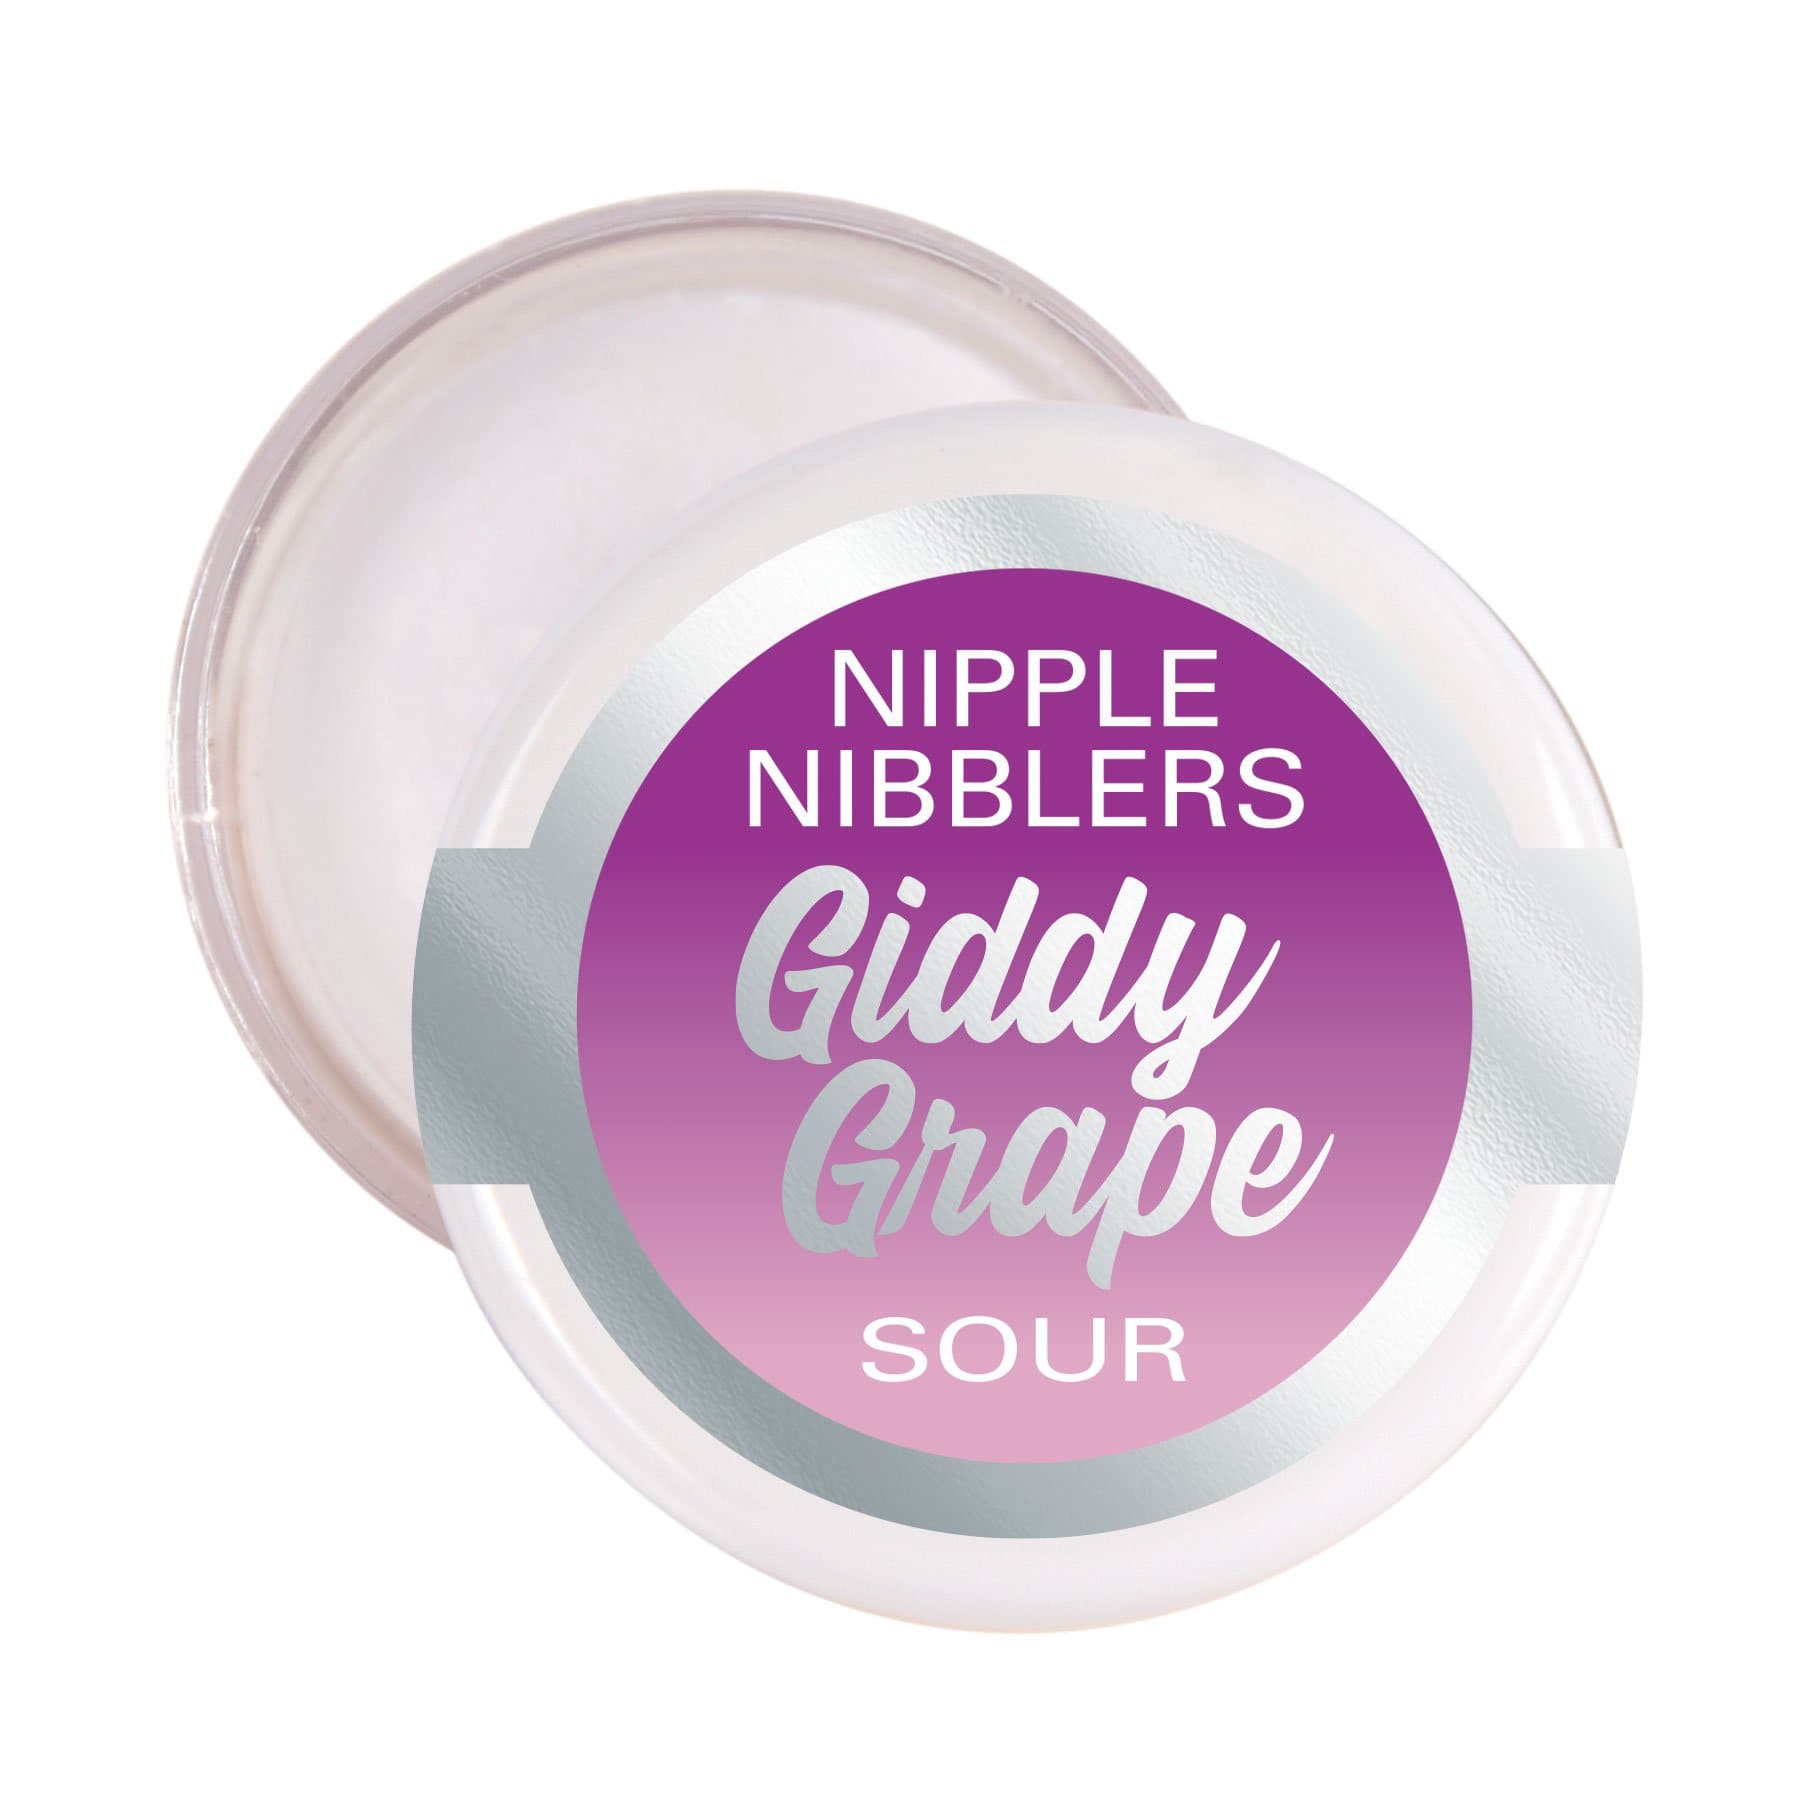 nipple nibbler sour pleasure balm giddy grape 3g jar